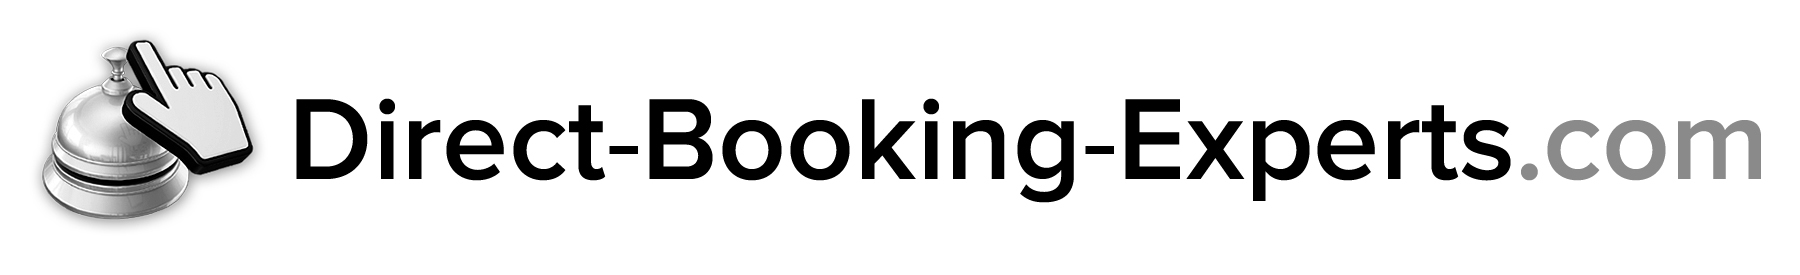 Logo Direct-Booking-Experts.com